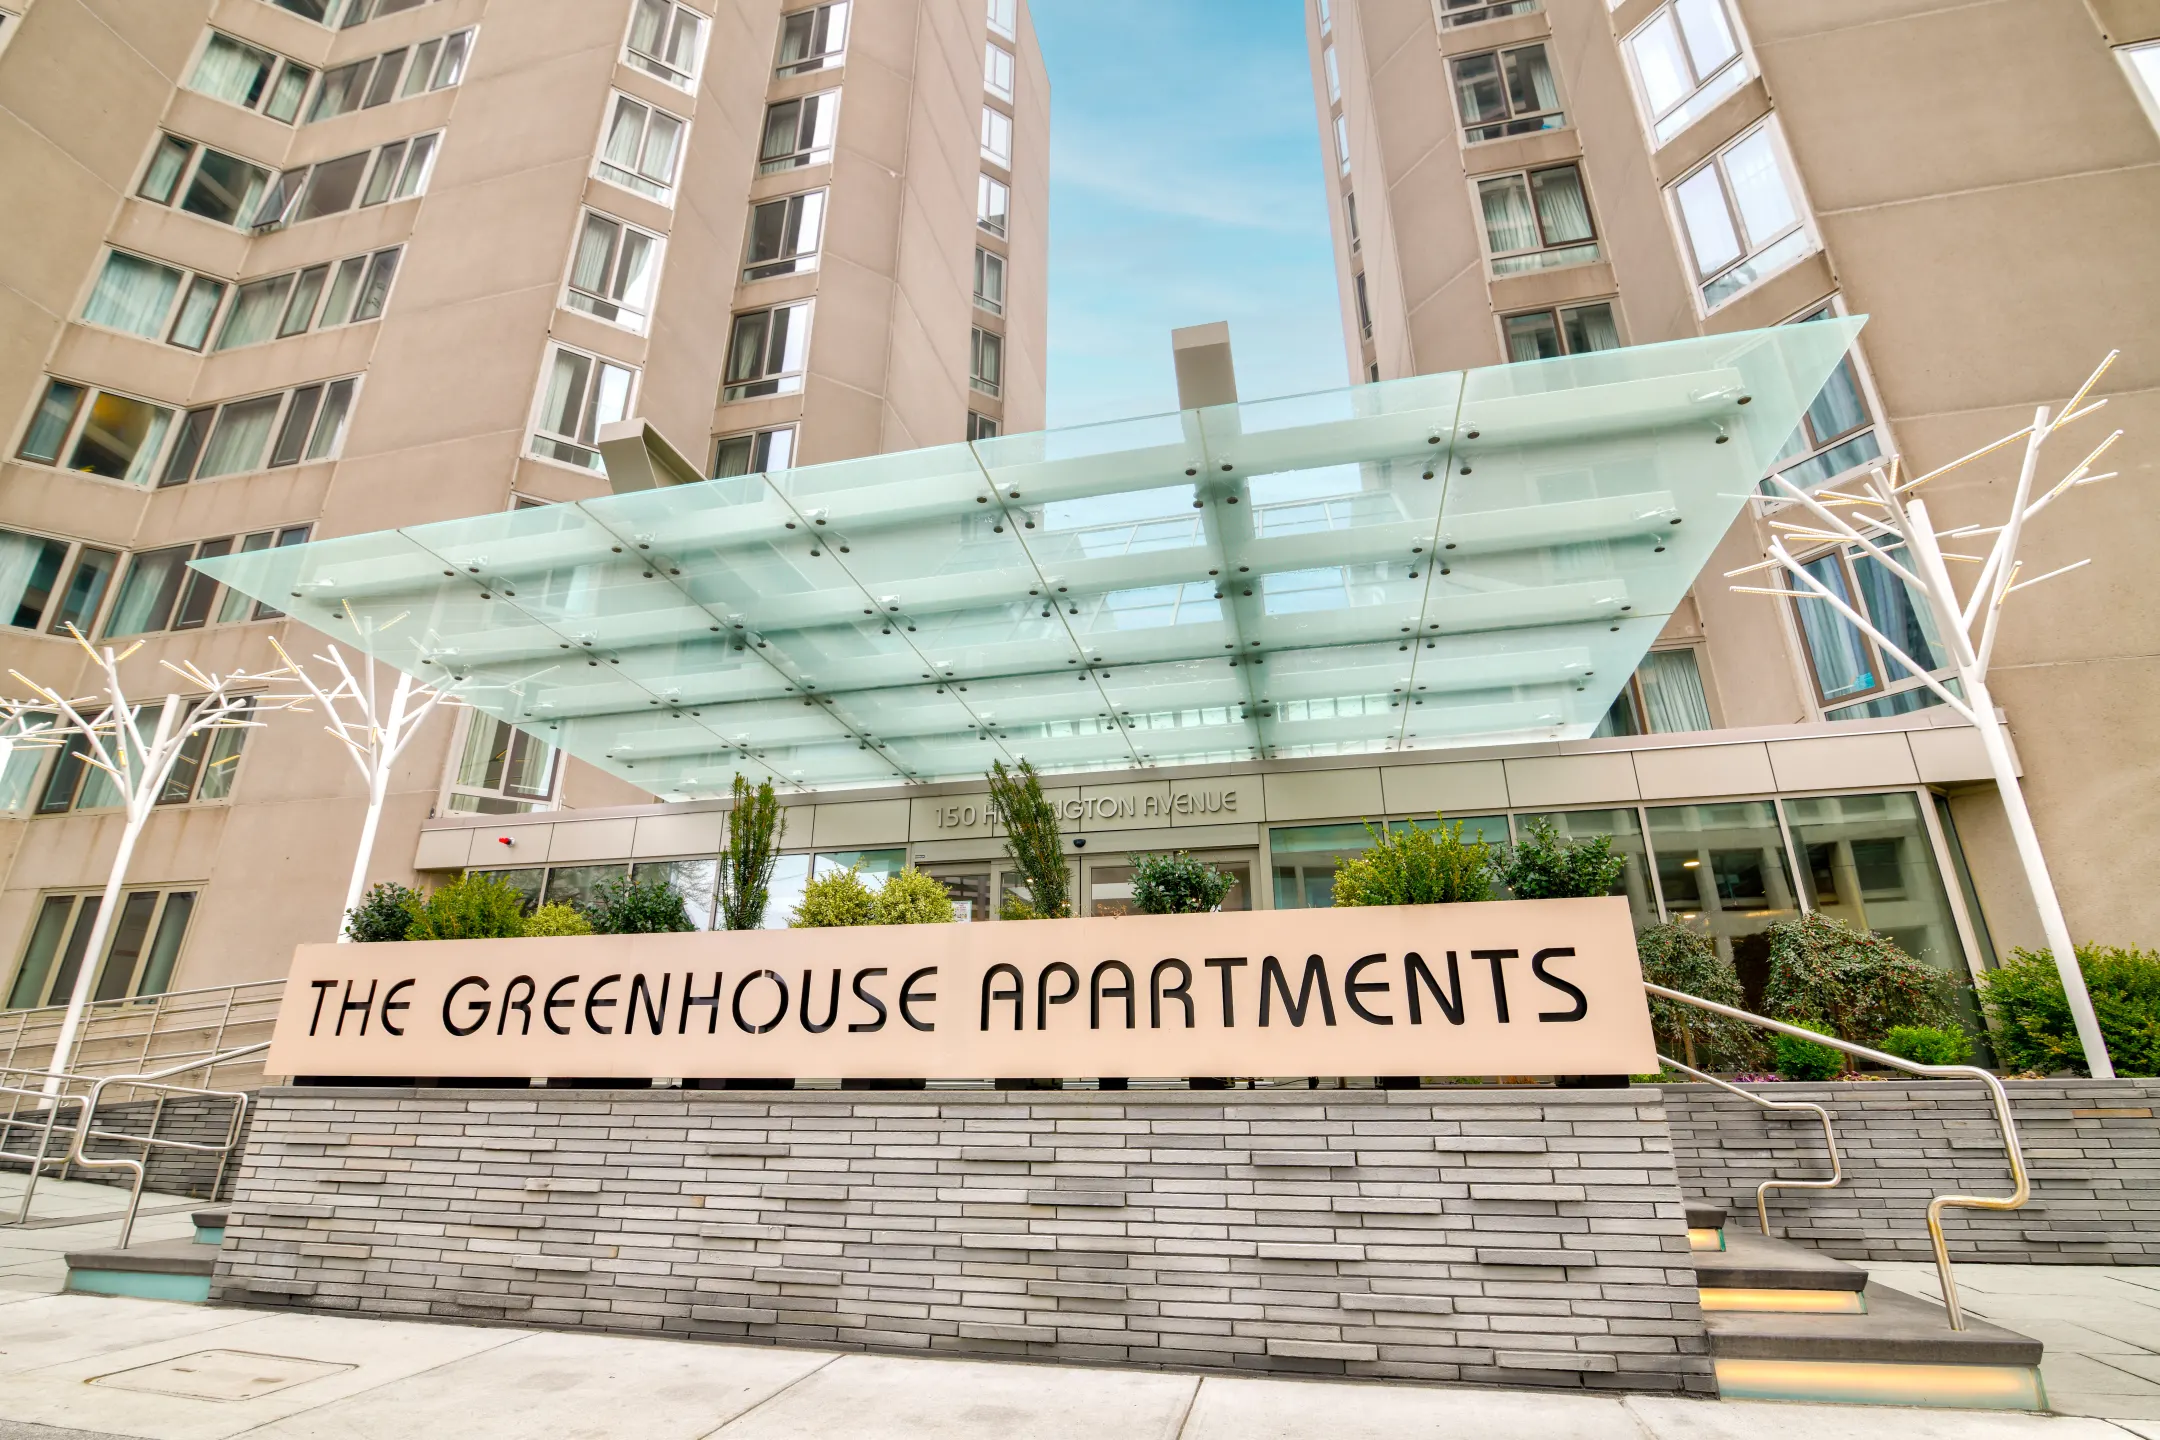 The Greenhouse Apartments - Boston, MA